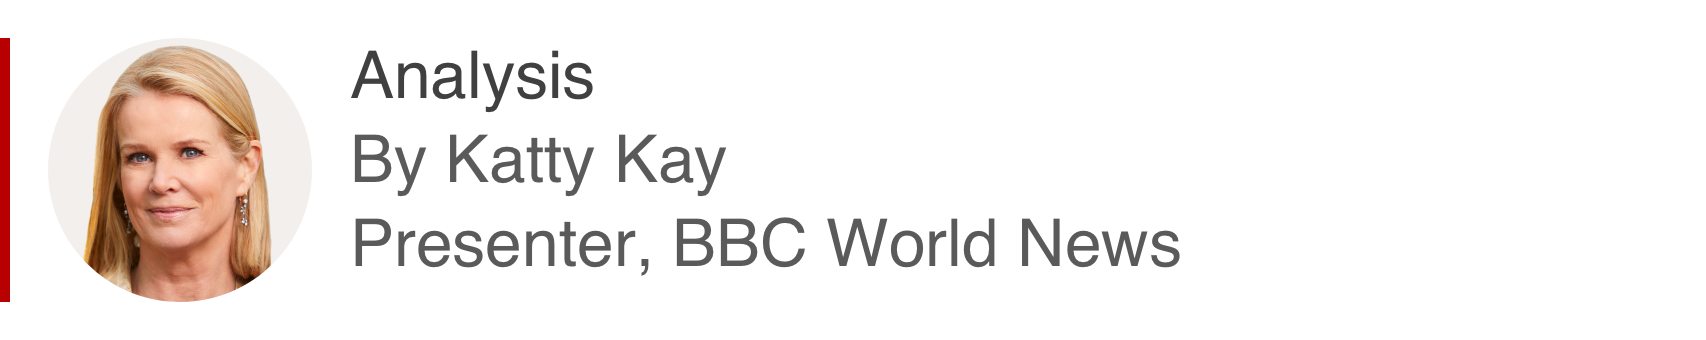 Аналитический бокс Кэтти Кэй, ведущей BBC World News